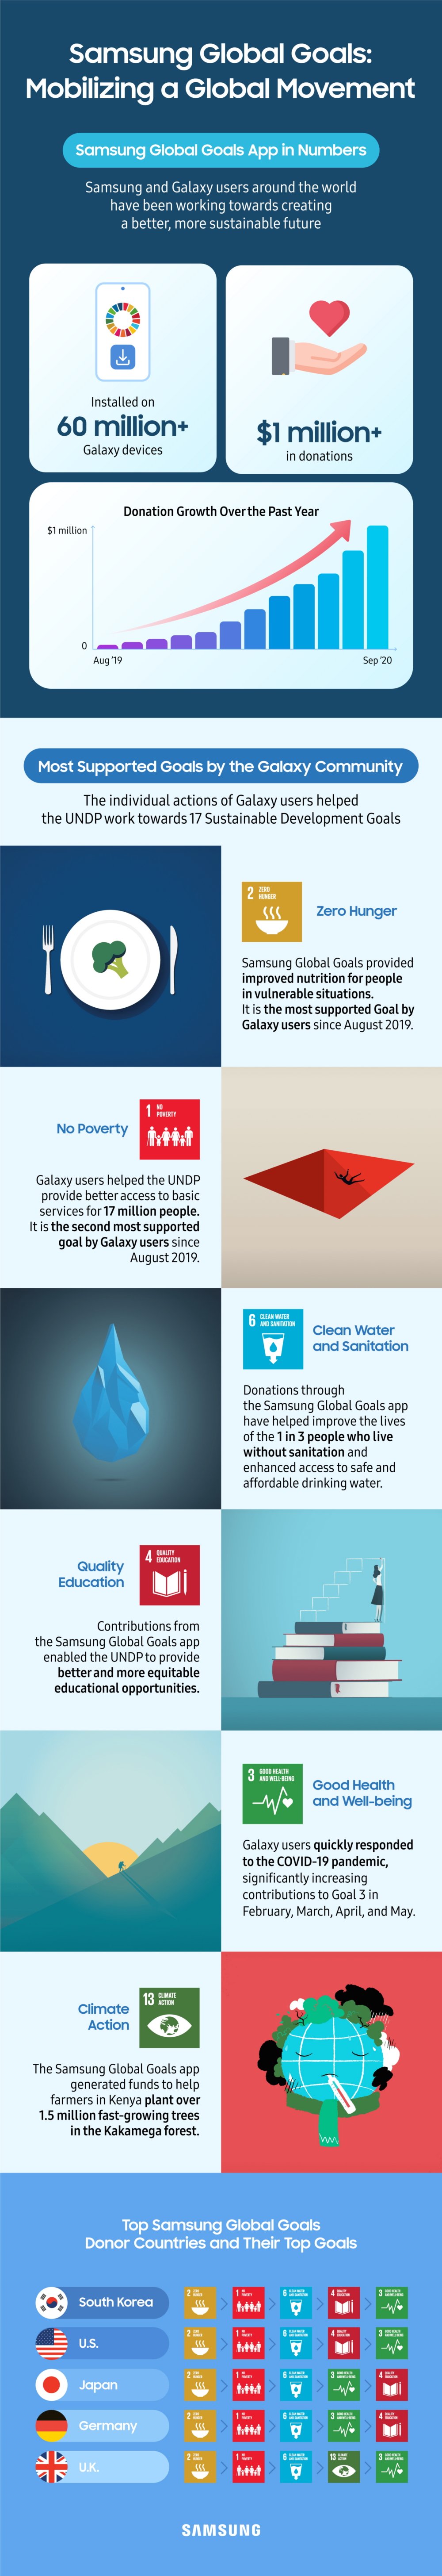 Samsung Global Goals App Infographic